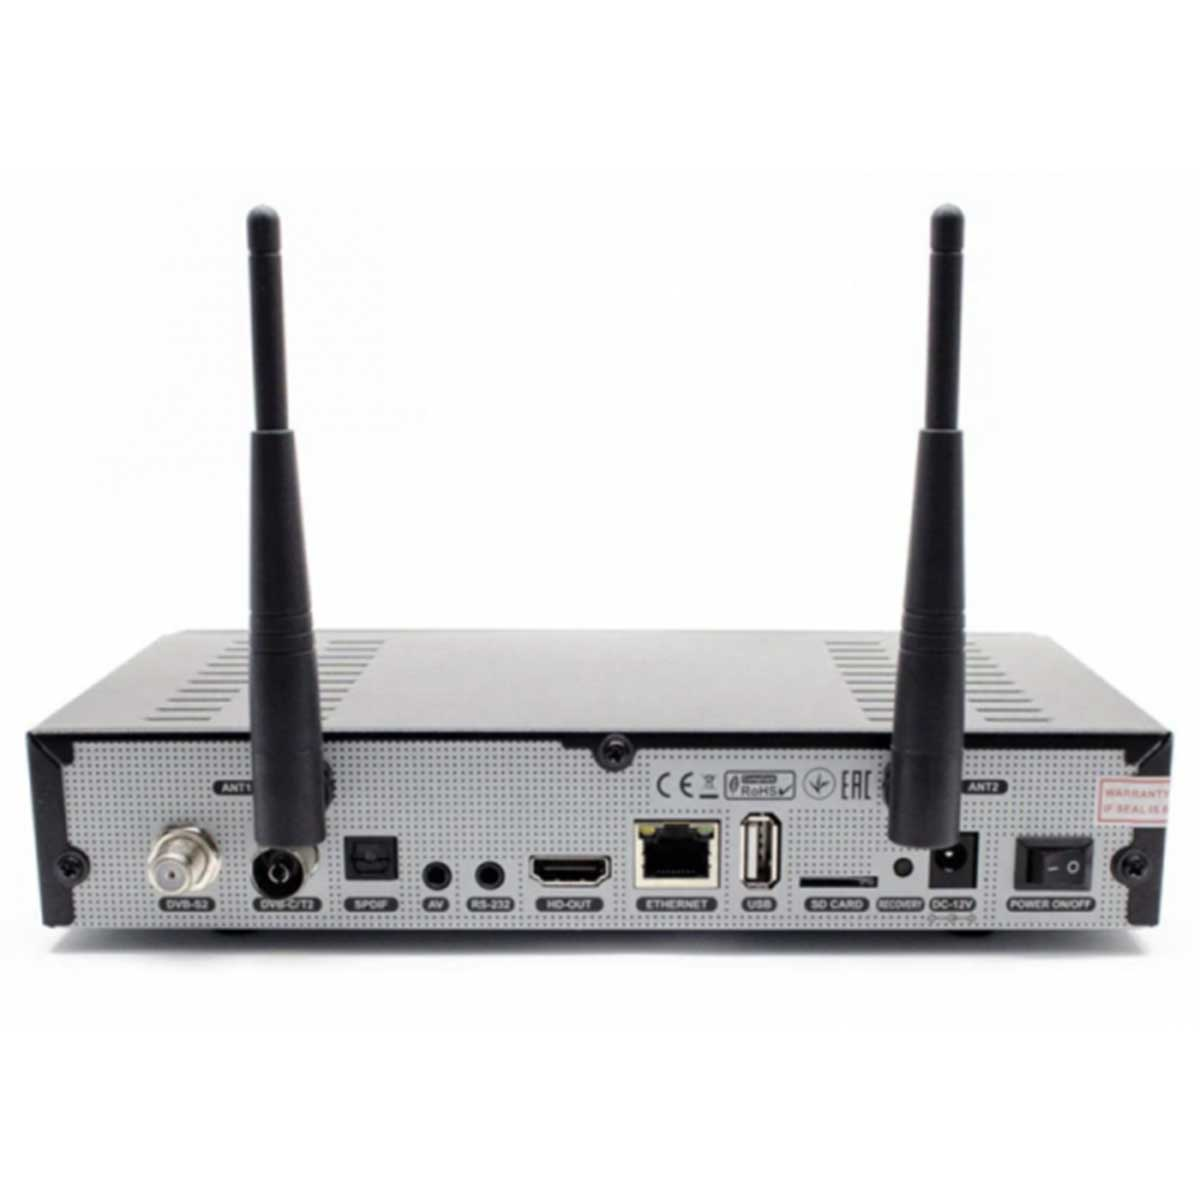 UCLAN Ustym 4K Pro schwarz) DVB-S2, (HDTV, DVB-C, Sat-Receiver DVB-T2 PVR-Funktion=optional, (H.265)